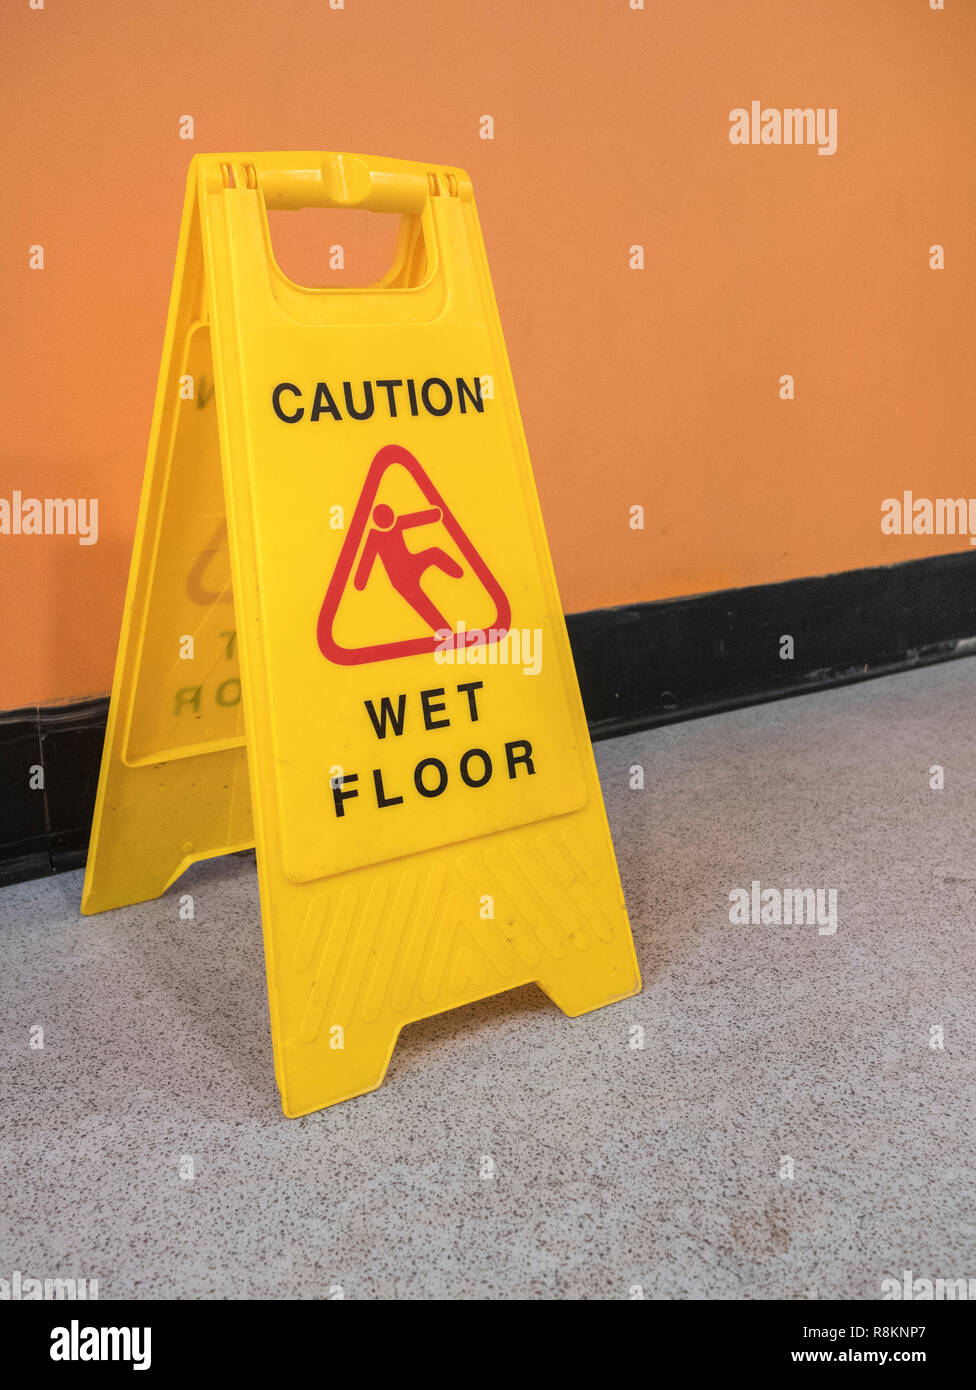 Yellow hazard sign warning 'Caution Wet Floor'. Metaphor slippery, falling, slip, financial risk, slippery slope. Slippery surface pictogram. Stock Photo